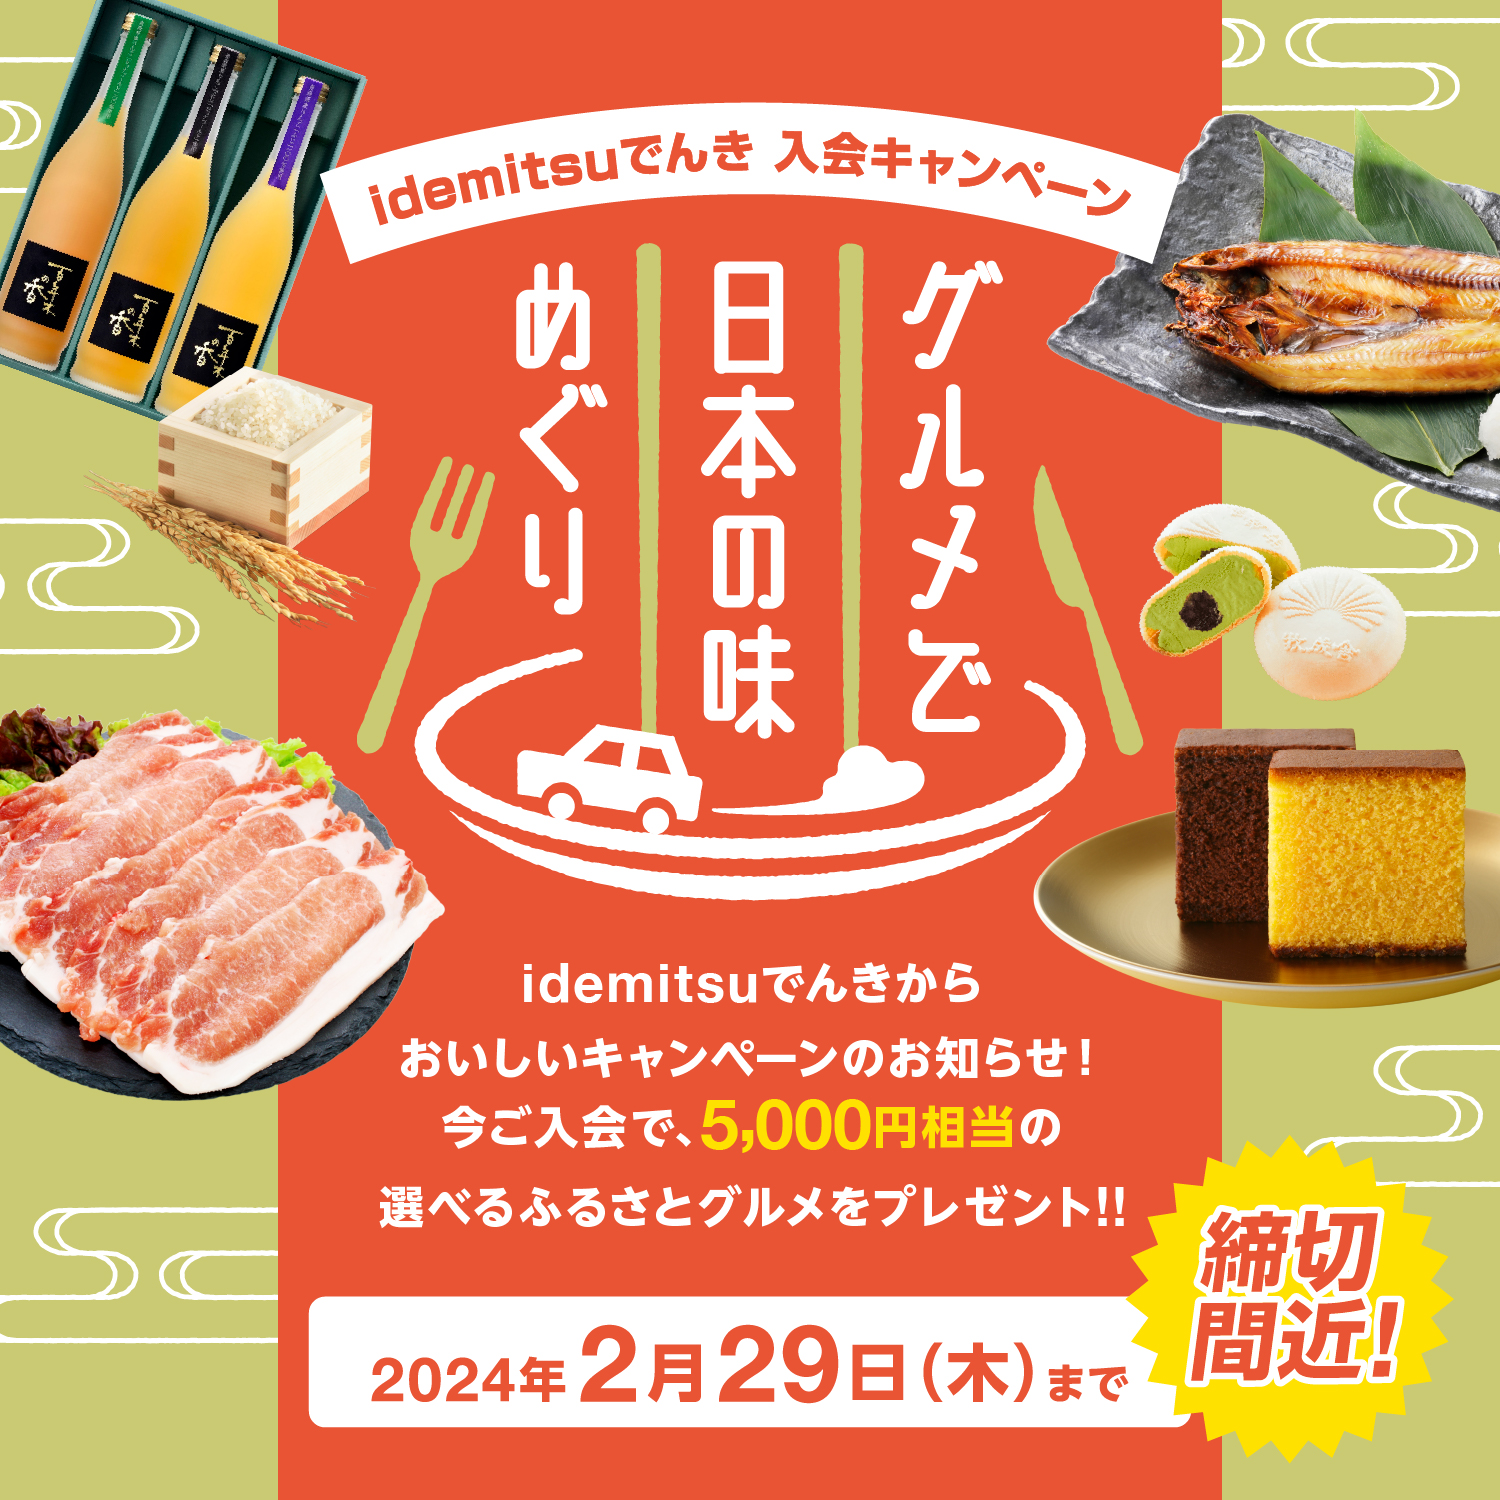 idemitsuでんき 入会キャンペーン グルメで日本の味めぐり